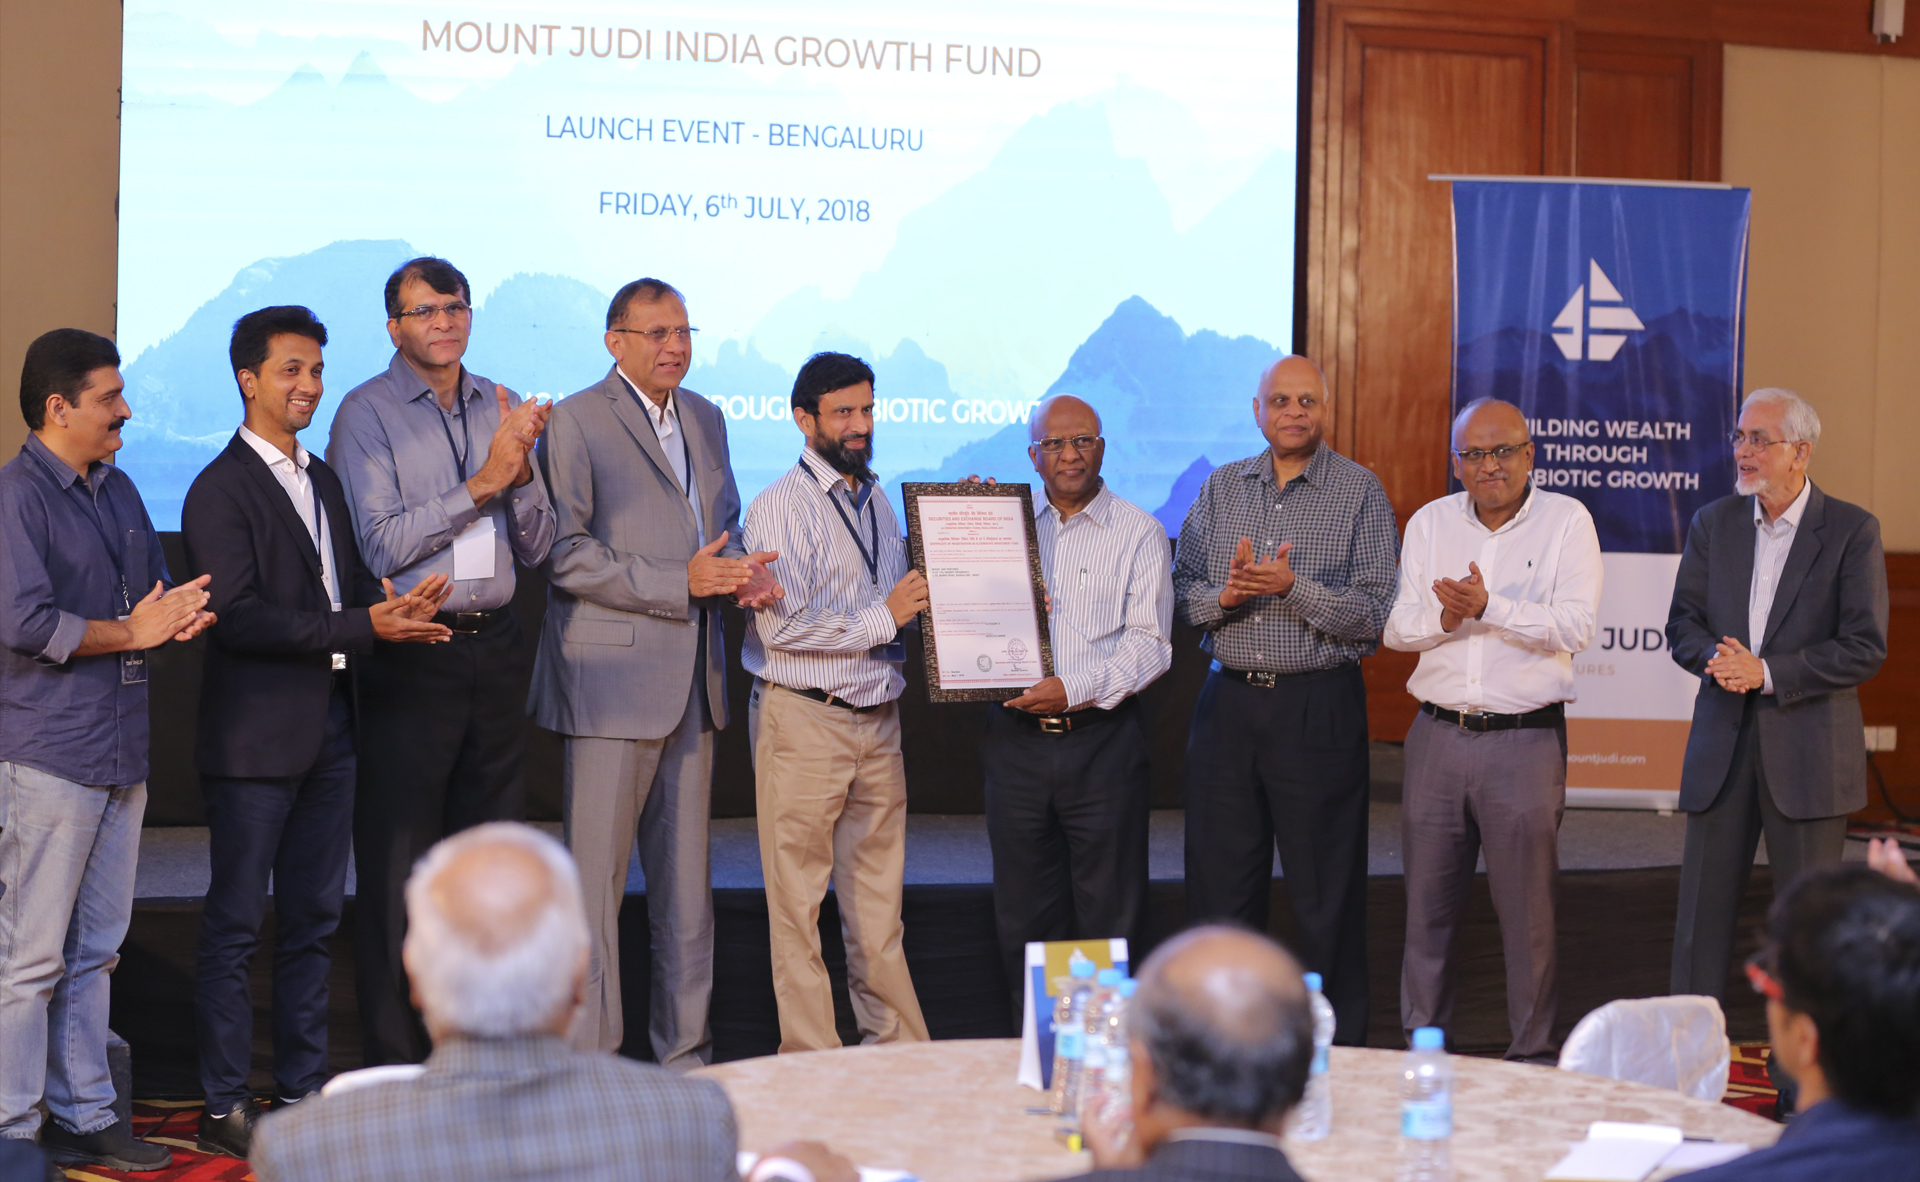 Dr. Sridhar Mitta, Mr. V. Namasivayam and Mr. Mustafa Wajid inaugurating Mount Judi India Growth Fund by handing over SEBI license to General Partners of Mount Judi Ventures